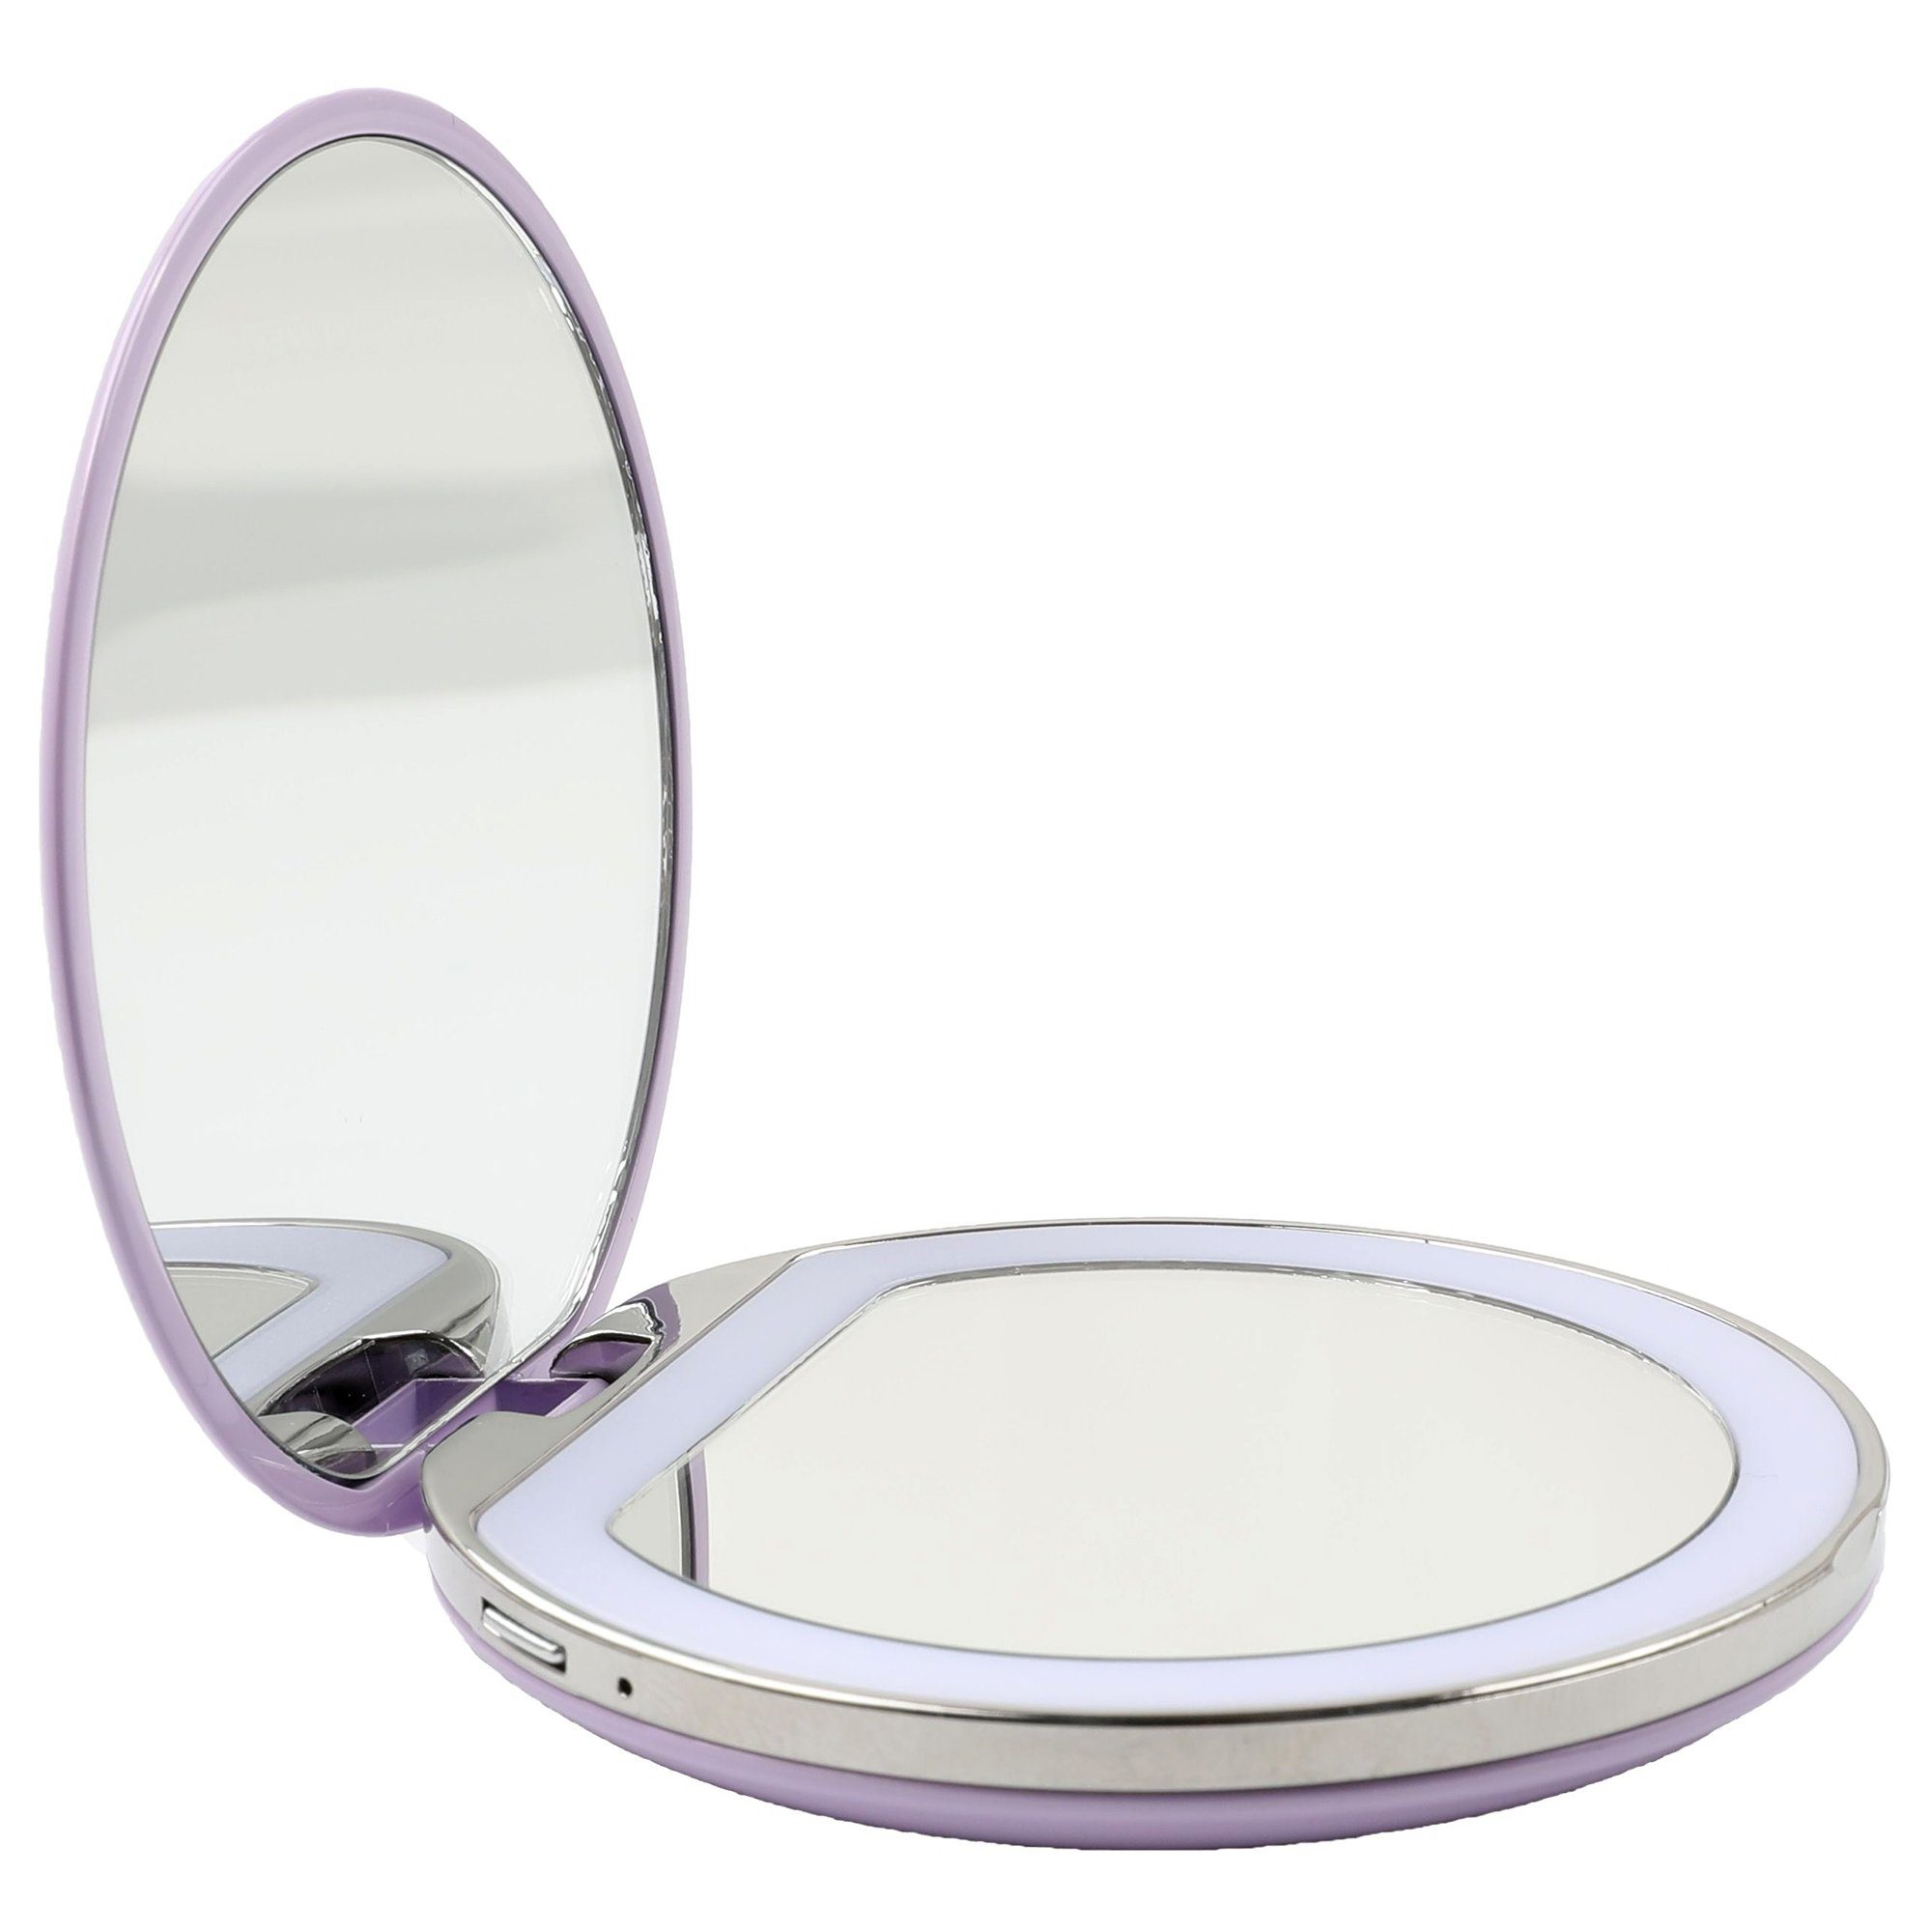 AILORIA Kosmetikspiegel MAQUILLAGE, Taschenspiegel mit LED-Beleuchtung (USB) lila | lila | Schminkspiegel